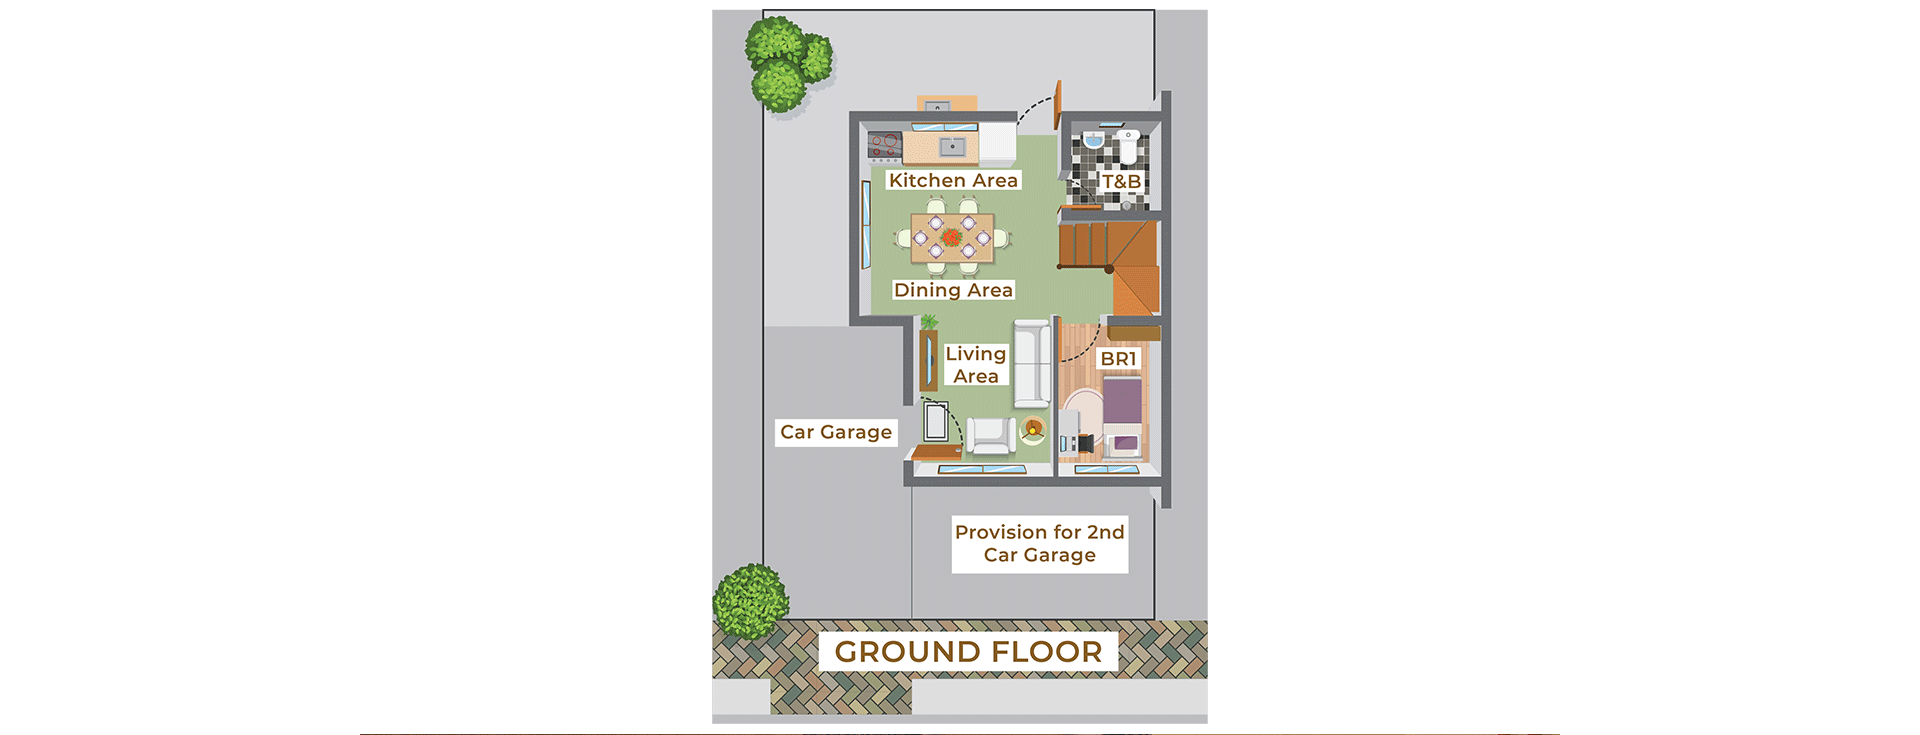 SHPY_Callista Ground Floor Plan